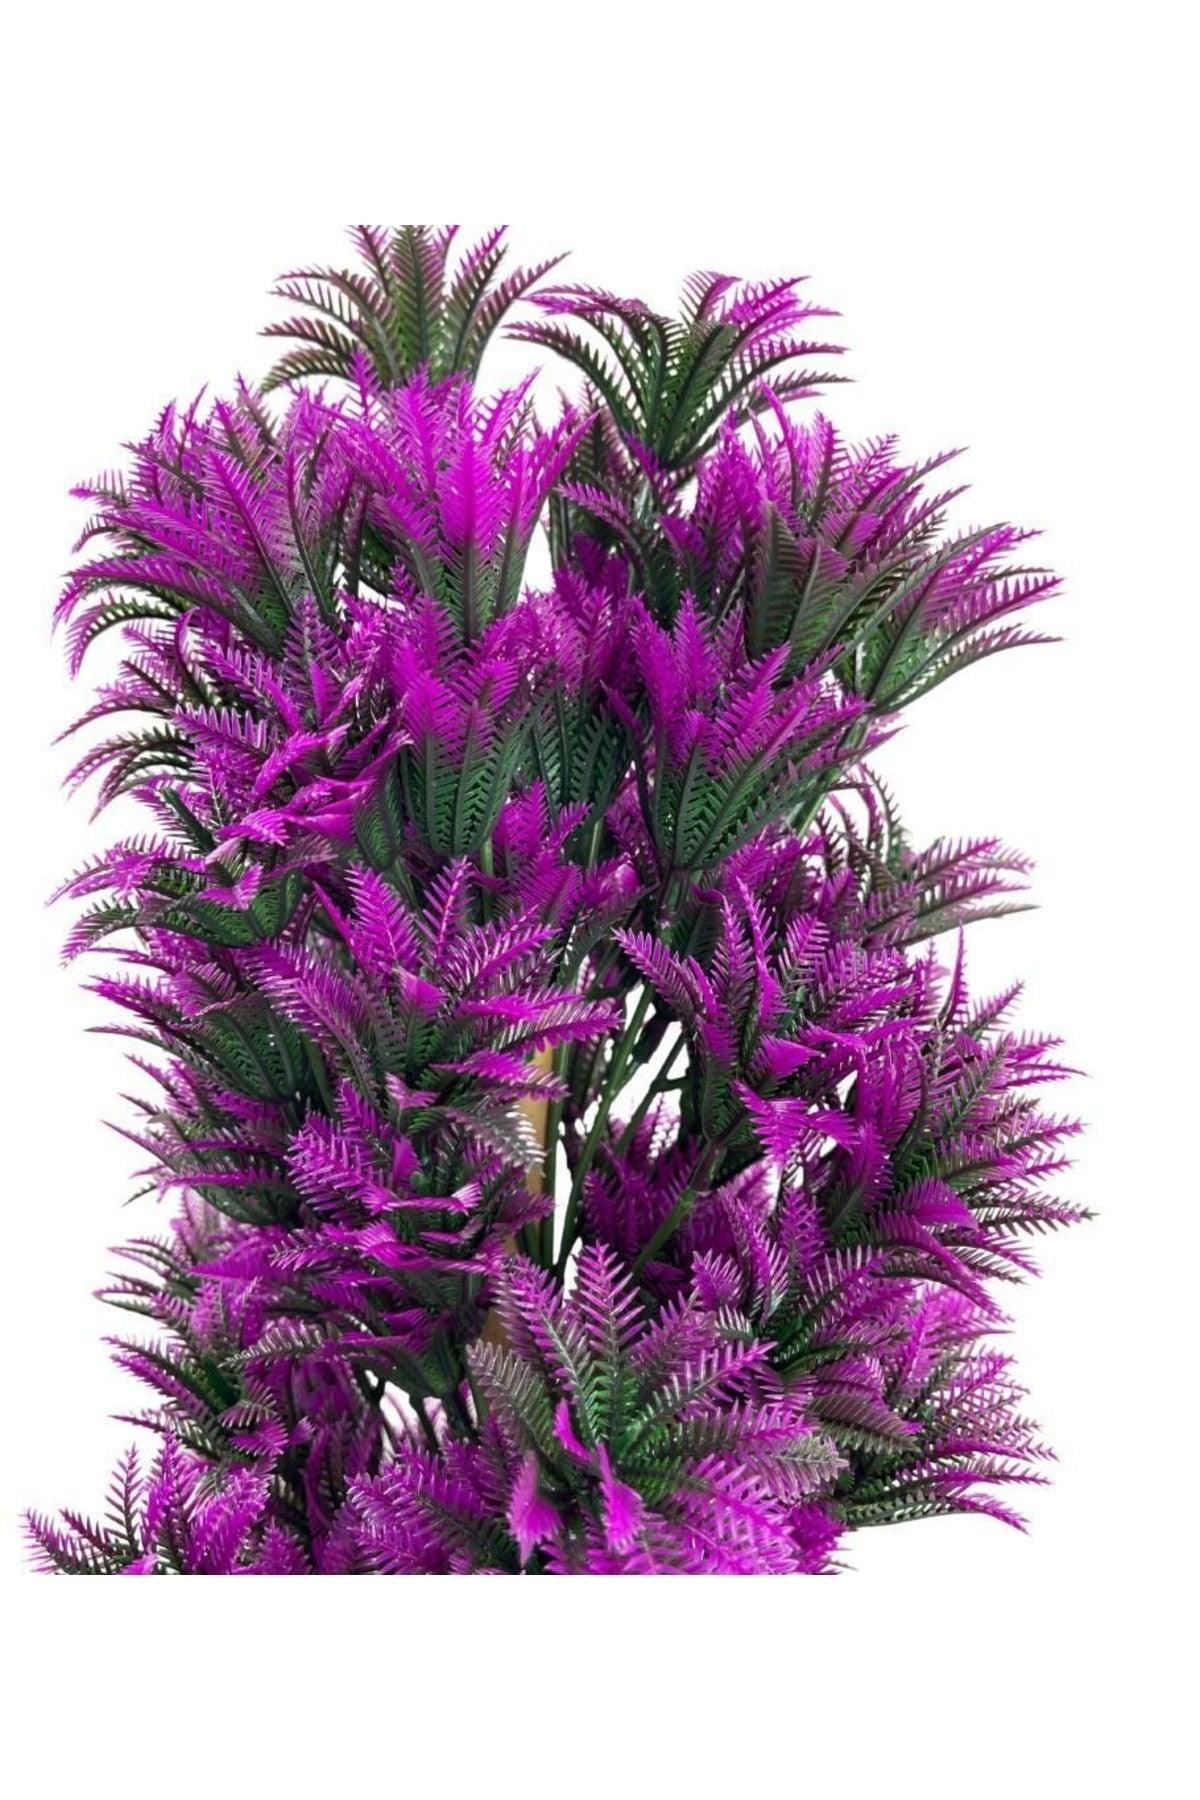 Artificial Flower Black Potted Fuchsia Sycas Tree 55cm - Swordslife